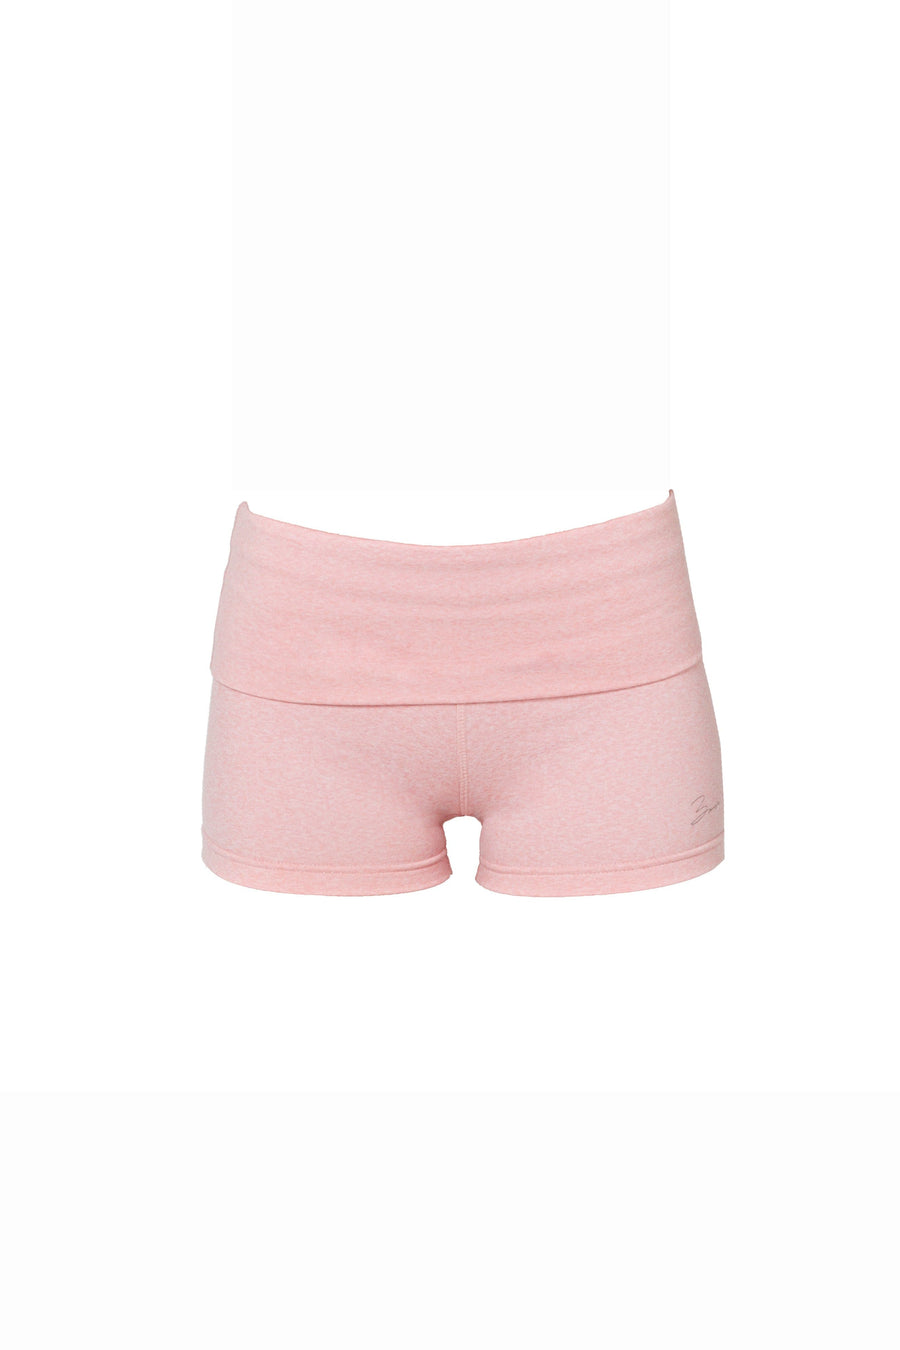 BASE shorts - pink marle  -  CLOTHING  -  B Ā M B A S W I M